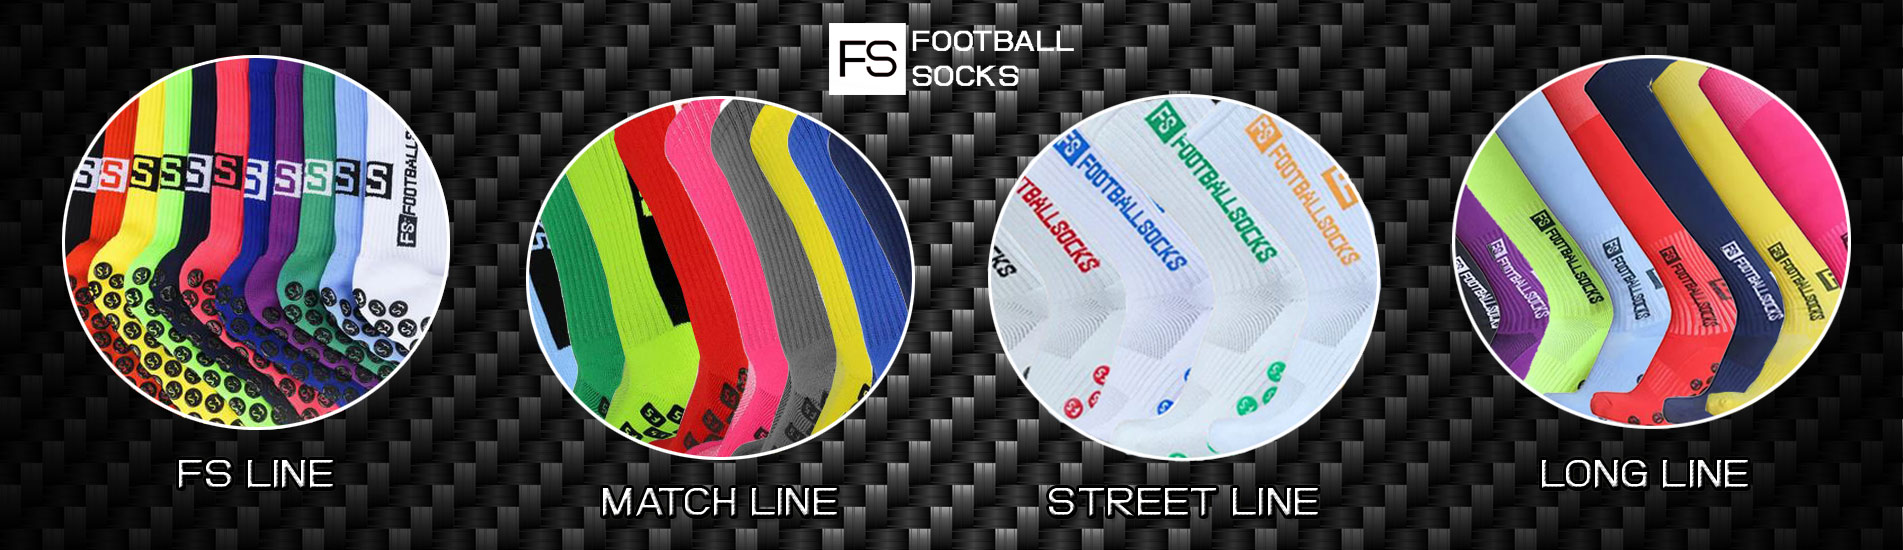 Chaussettes Antidérapantes FS Football Socks en France 